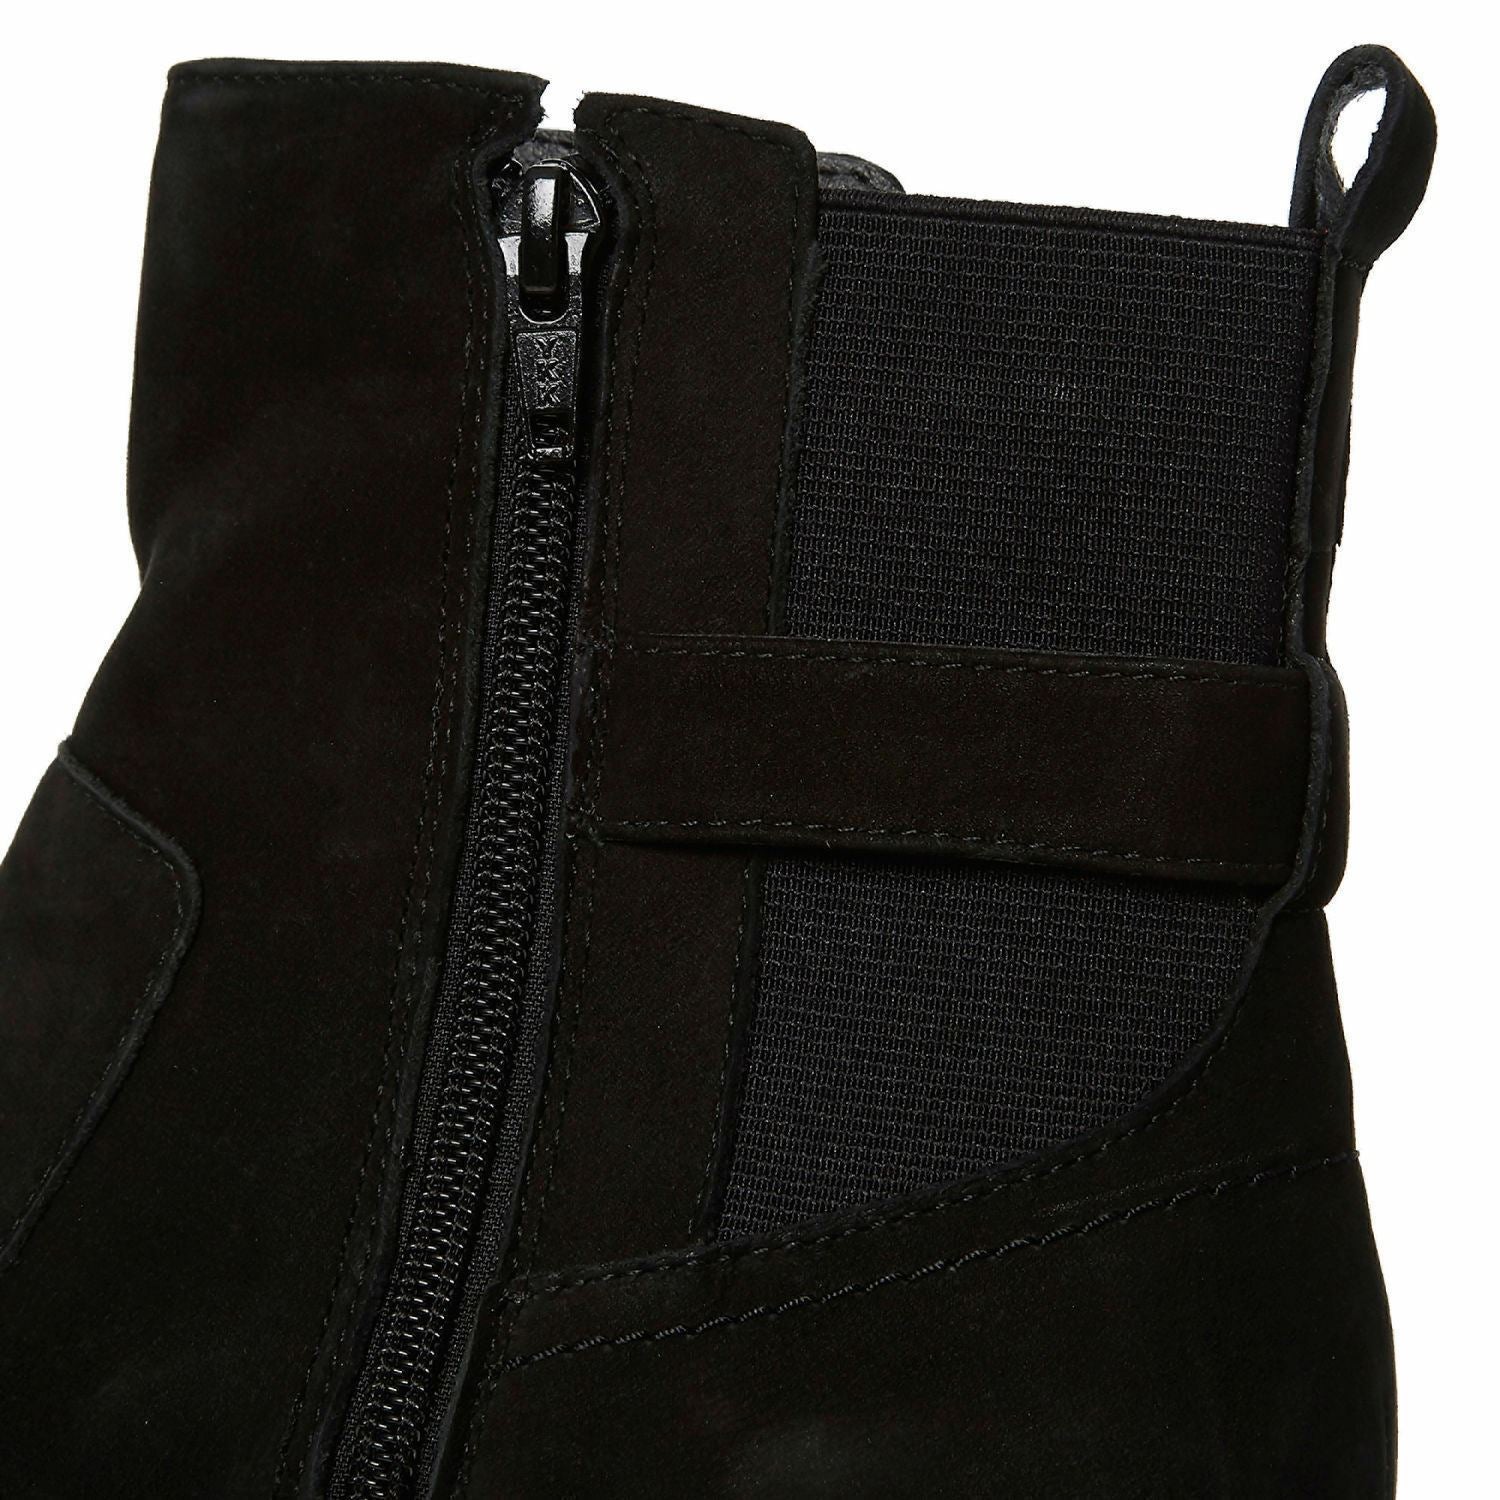 ROCKPORT Claudia Women's Black Suede Leather Zip Up Boots UK 3.5 UK 4